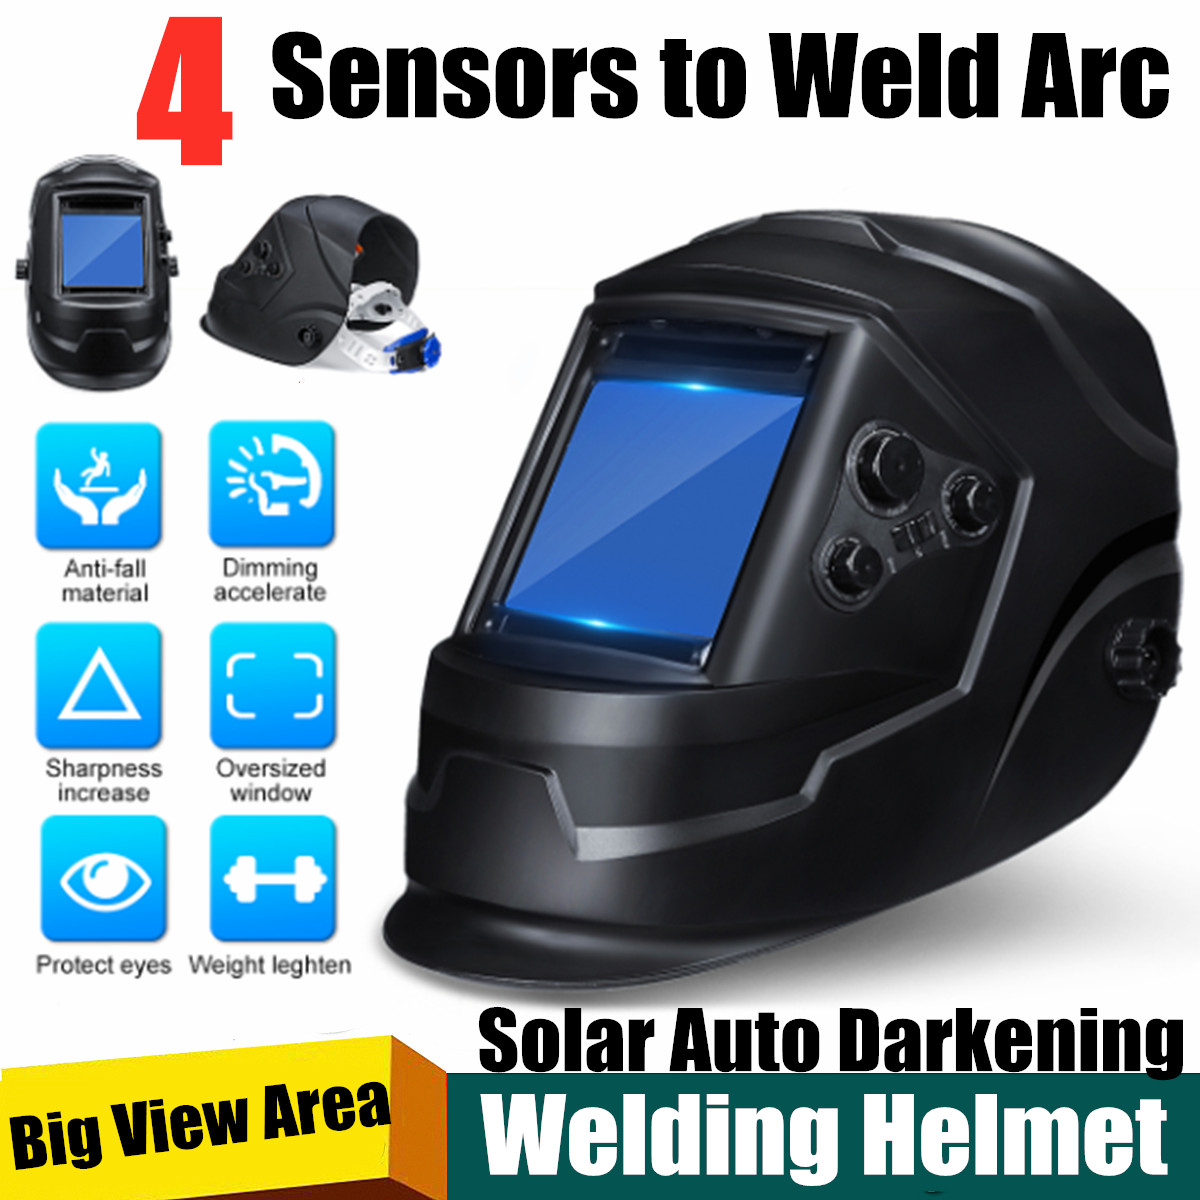 Solar-Energy-Automatic-Dimming-Welding-Mask-Auto-Darkening-Welding-Helmet-Big-View-Area-4-Sensors-Ex-1534647-8